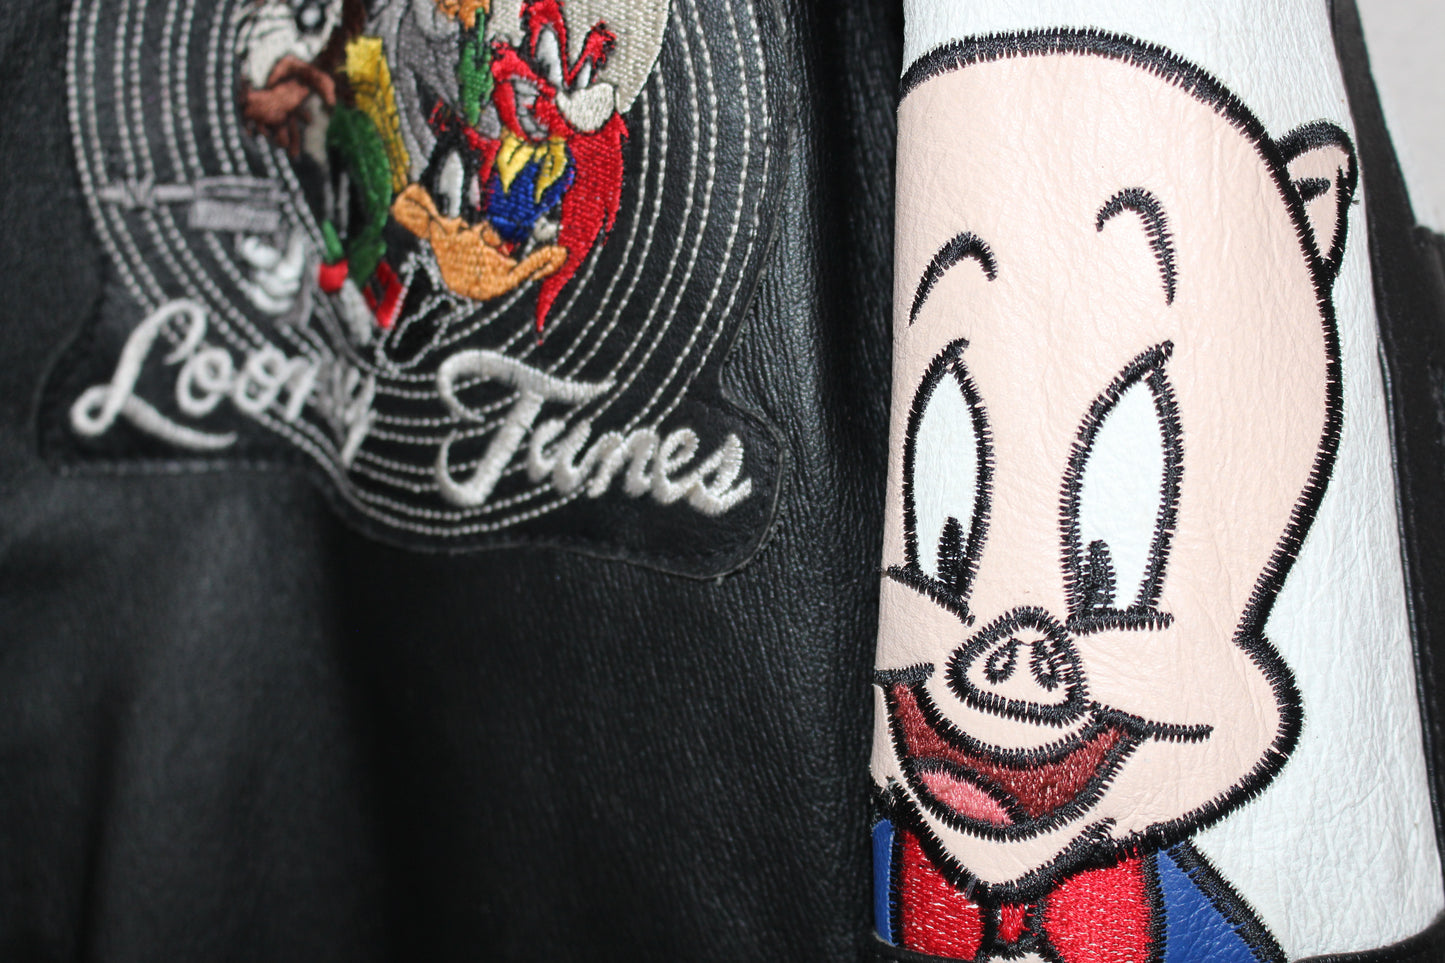 Rare Looney Tunes 1997 Leather Jacket (L)